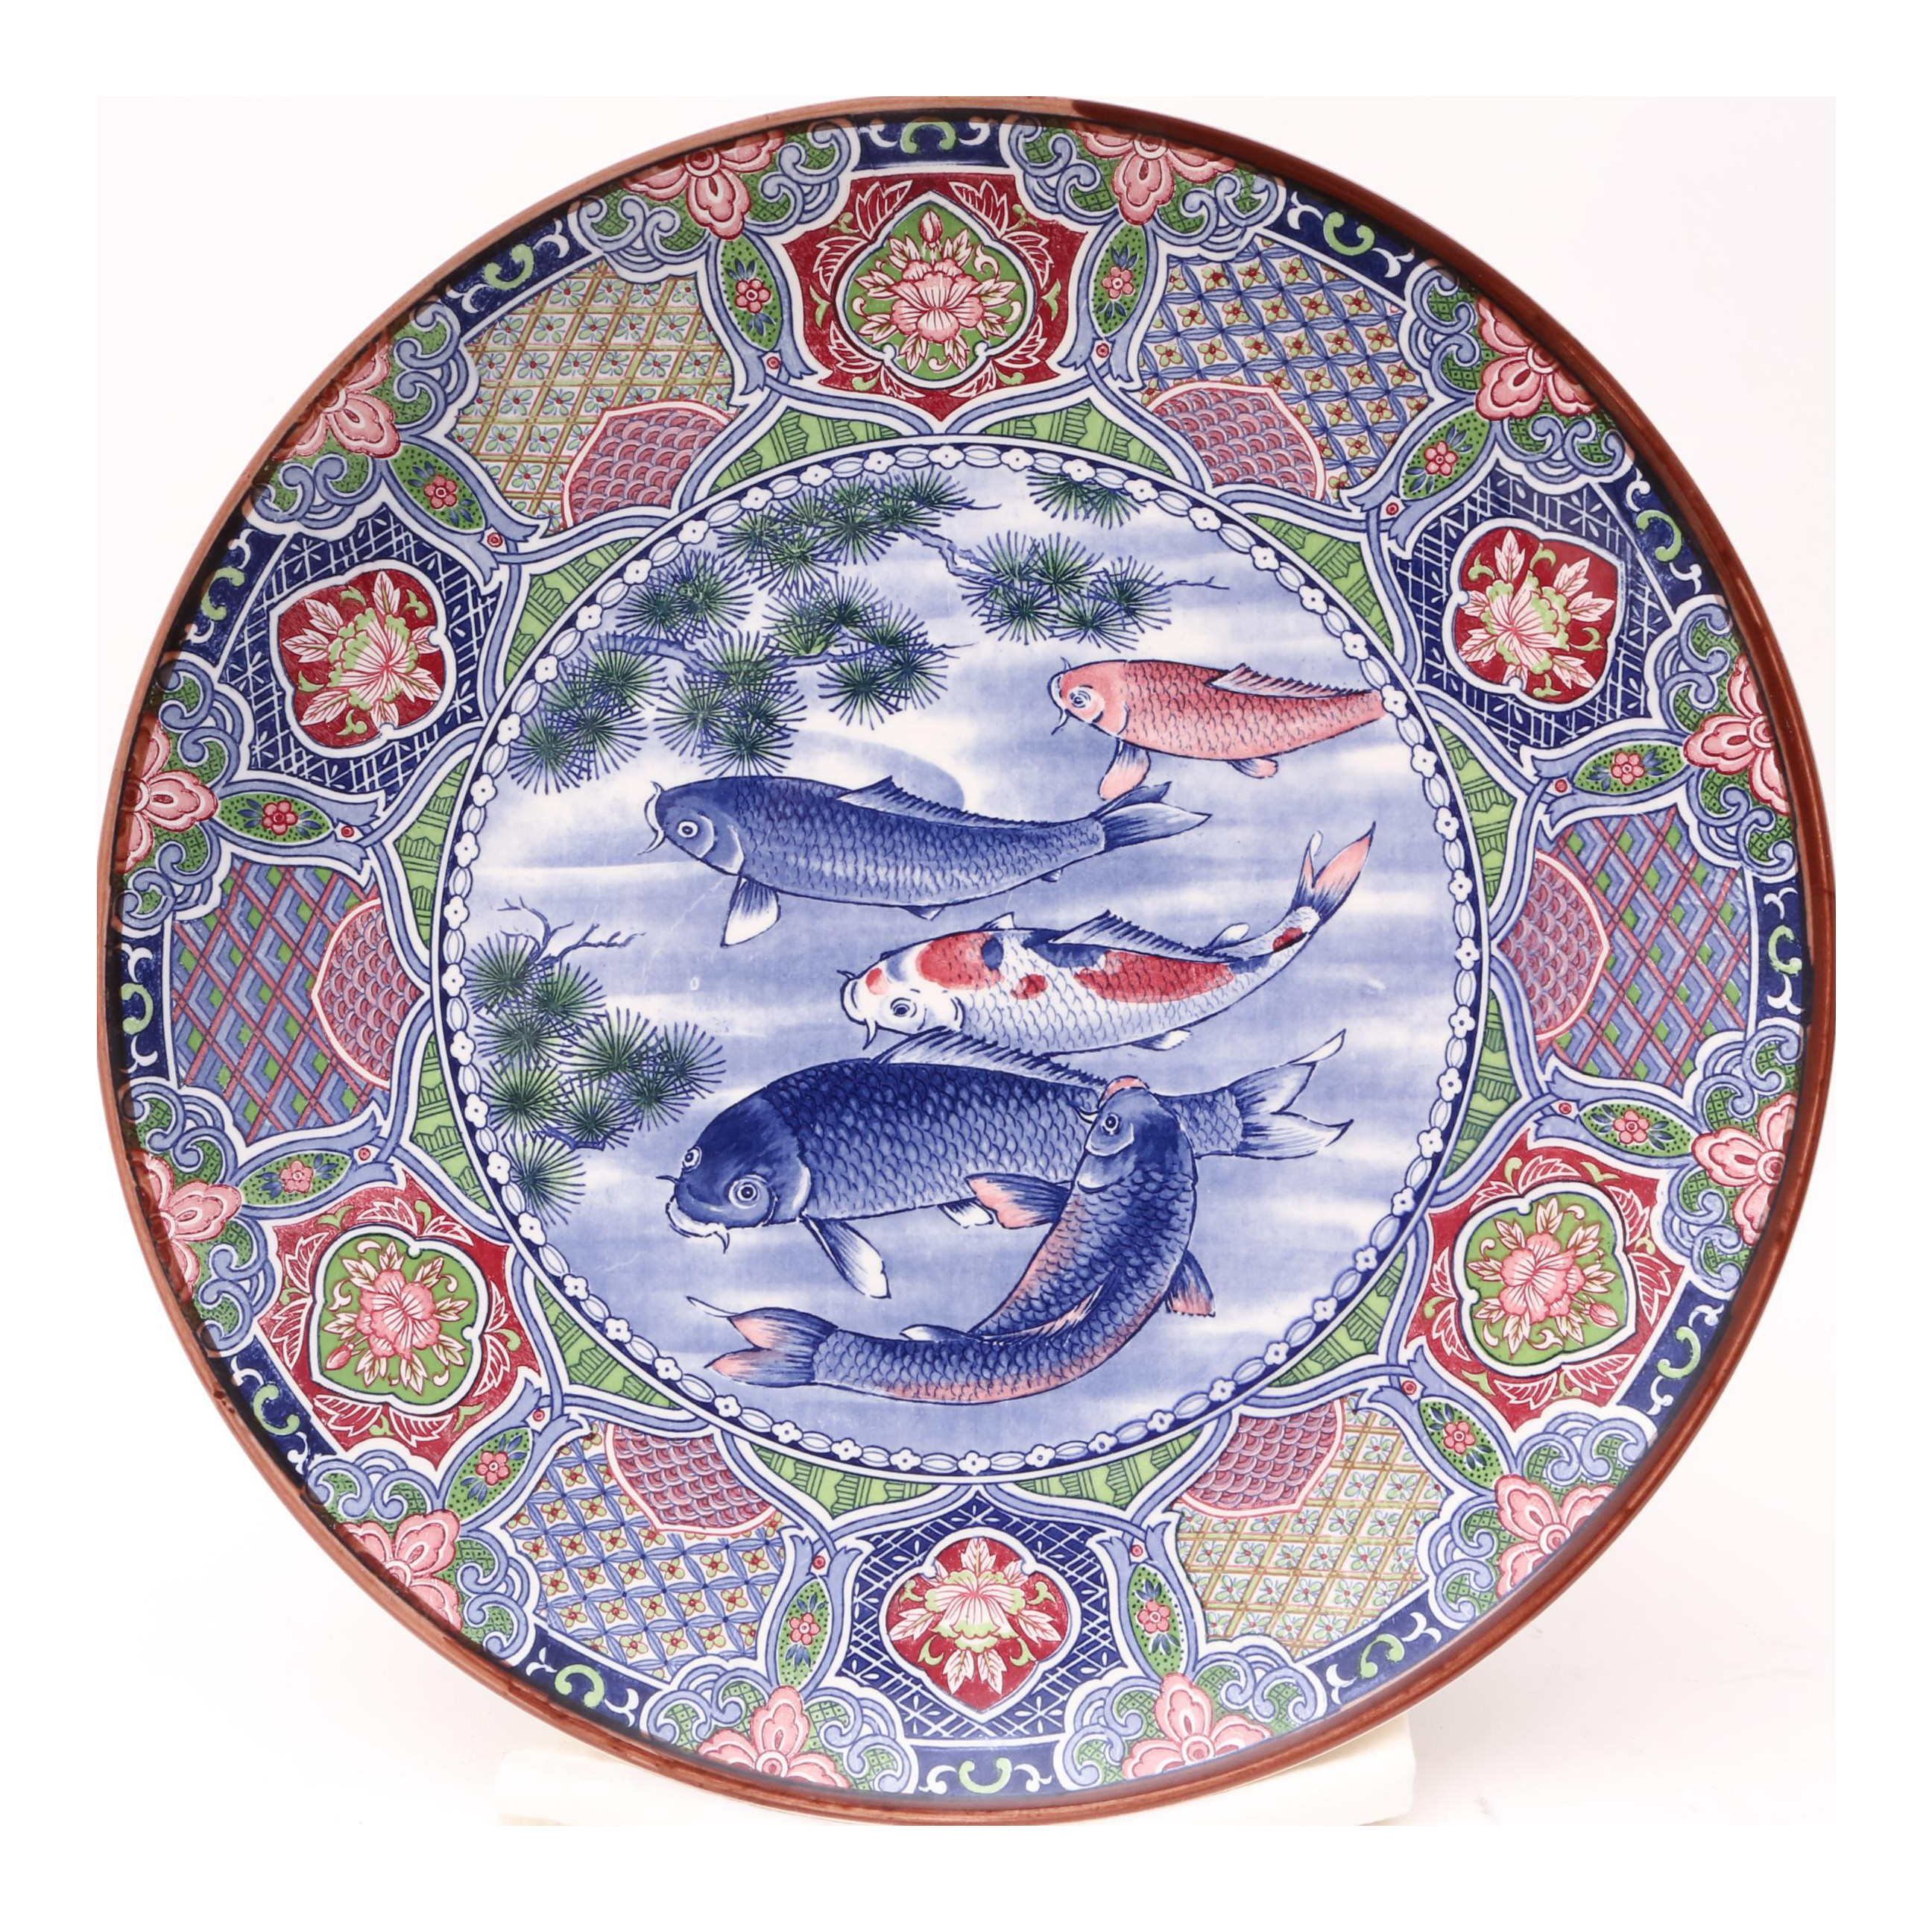 antique japanese porcelain vases of japanese large hand painted koi fish plate chairish regarding japanese large hand painted koi fish plate 6653